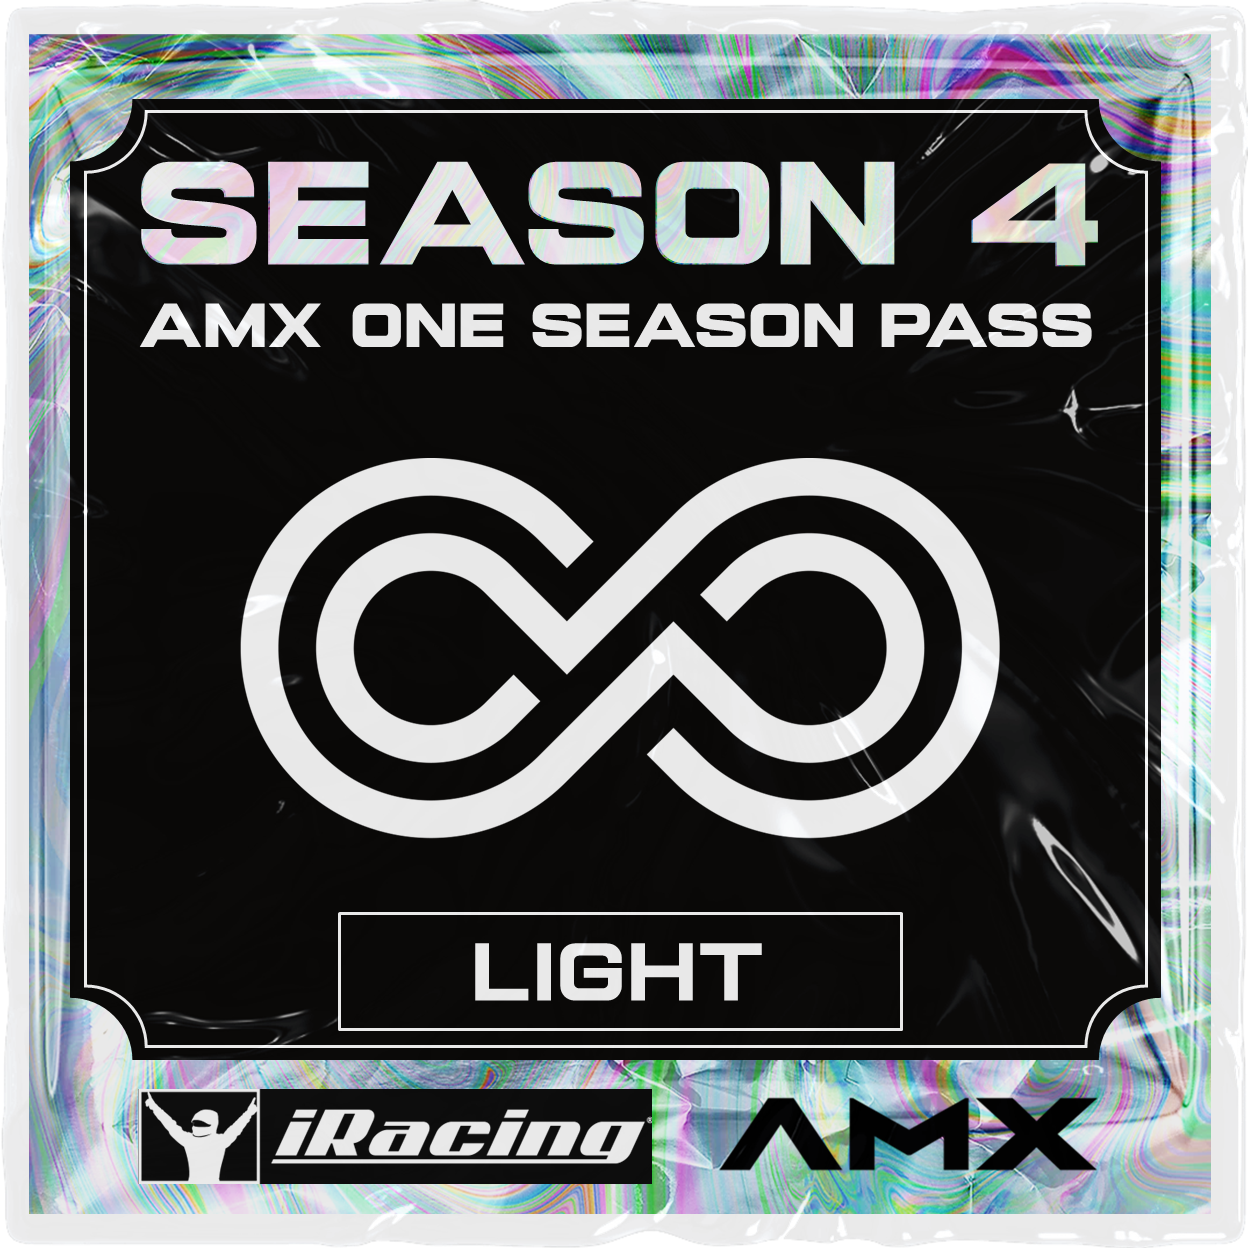 AMX ONE LIGHT Season Pass